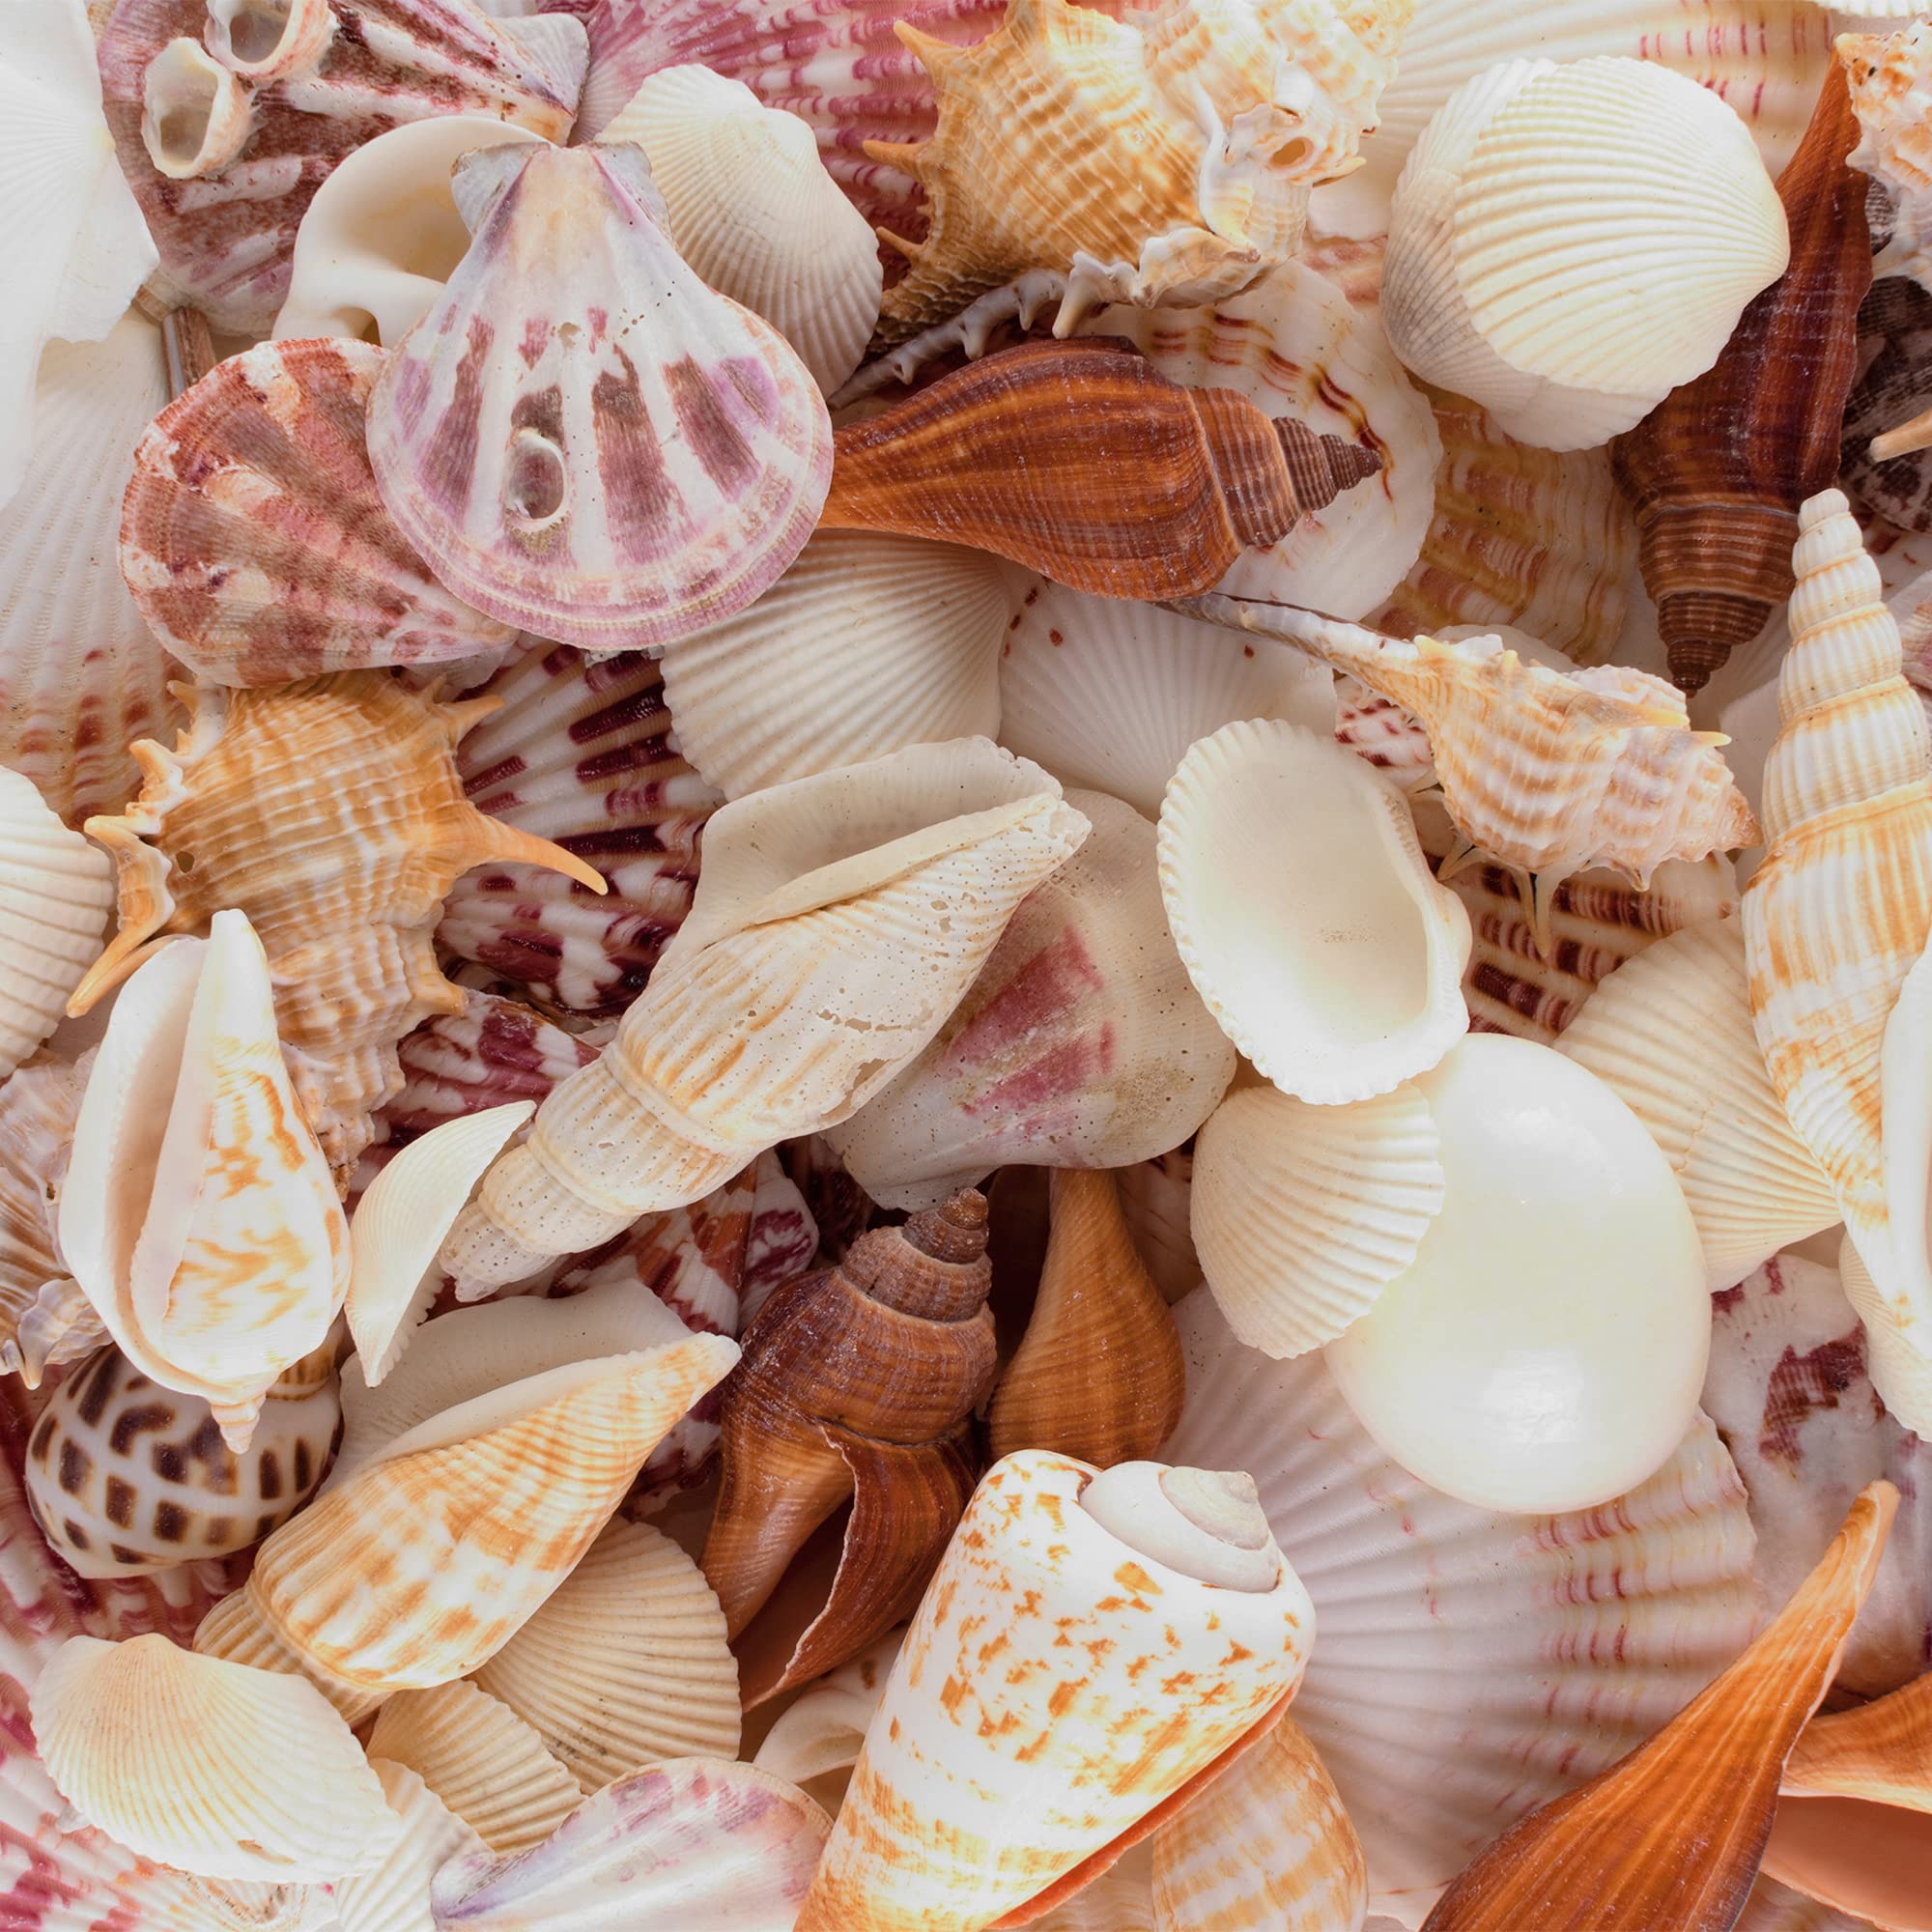 Ocean Shells. Beach Shells. Marine Aquarium Decor, Jewelry Shells